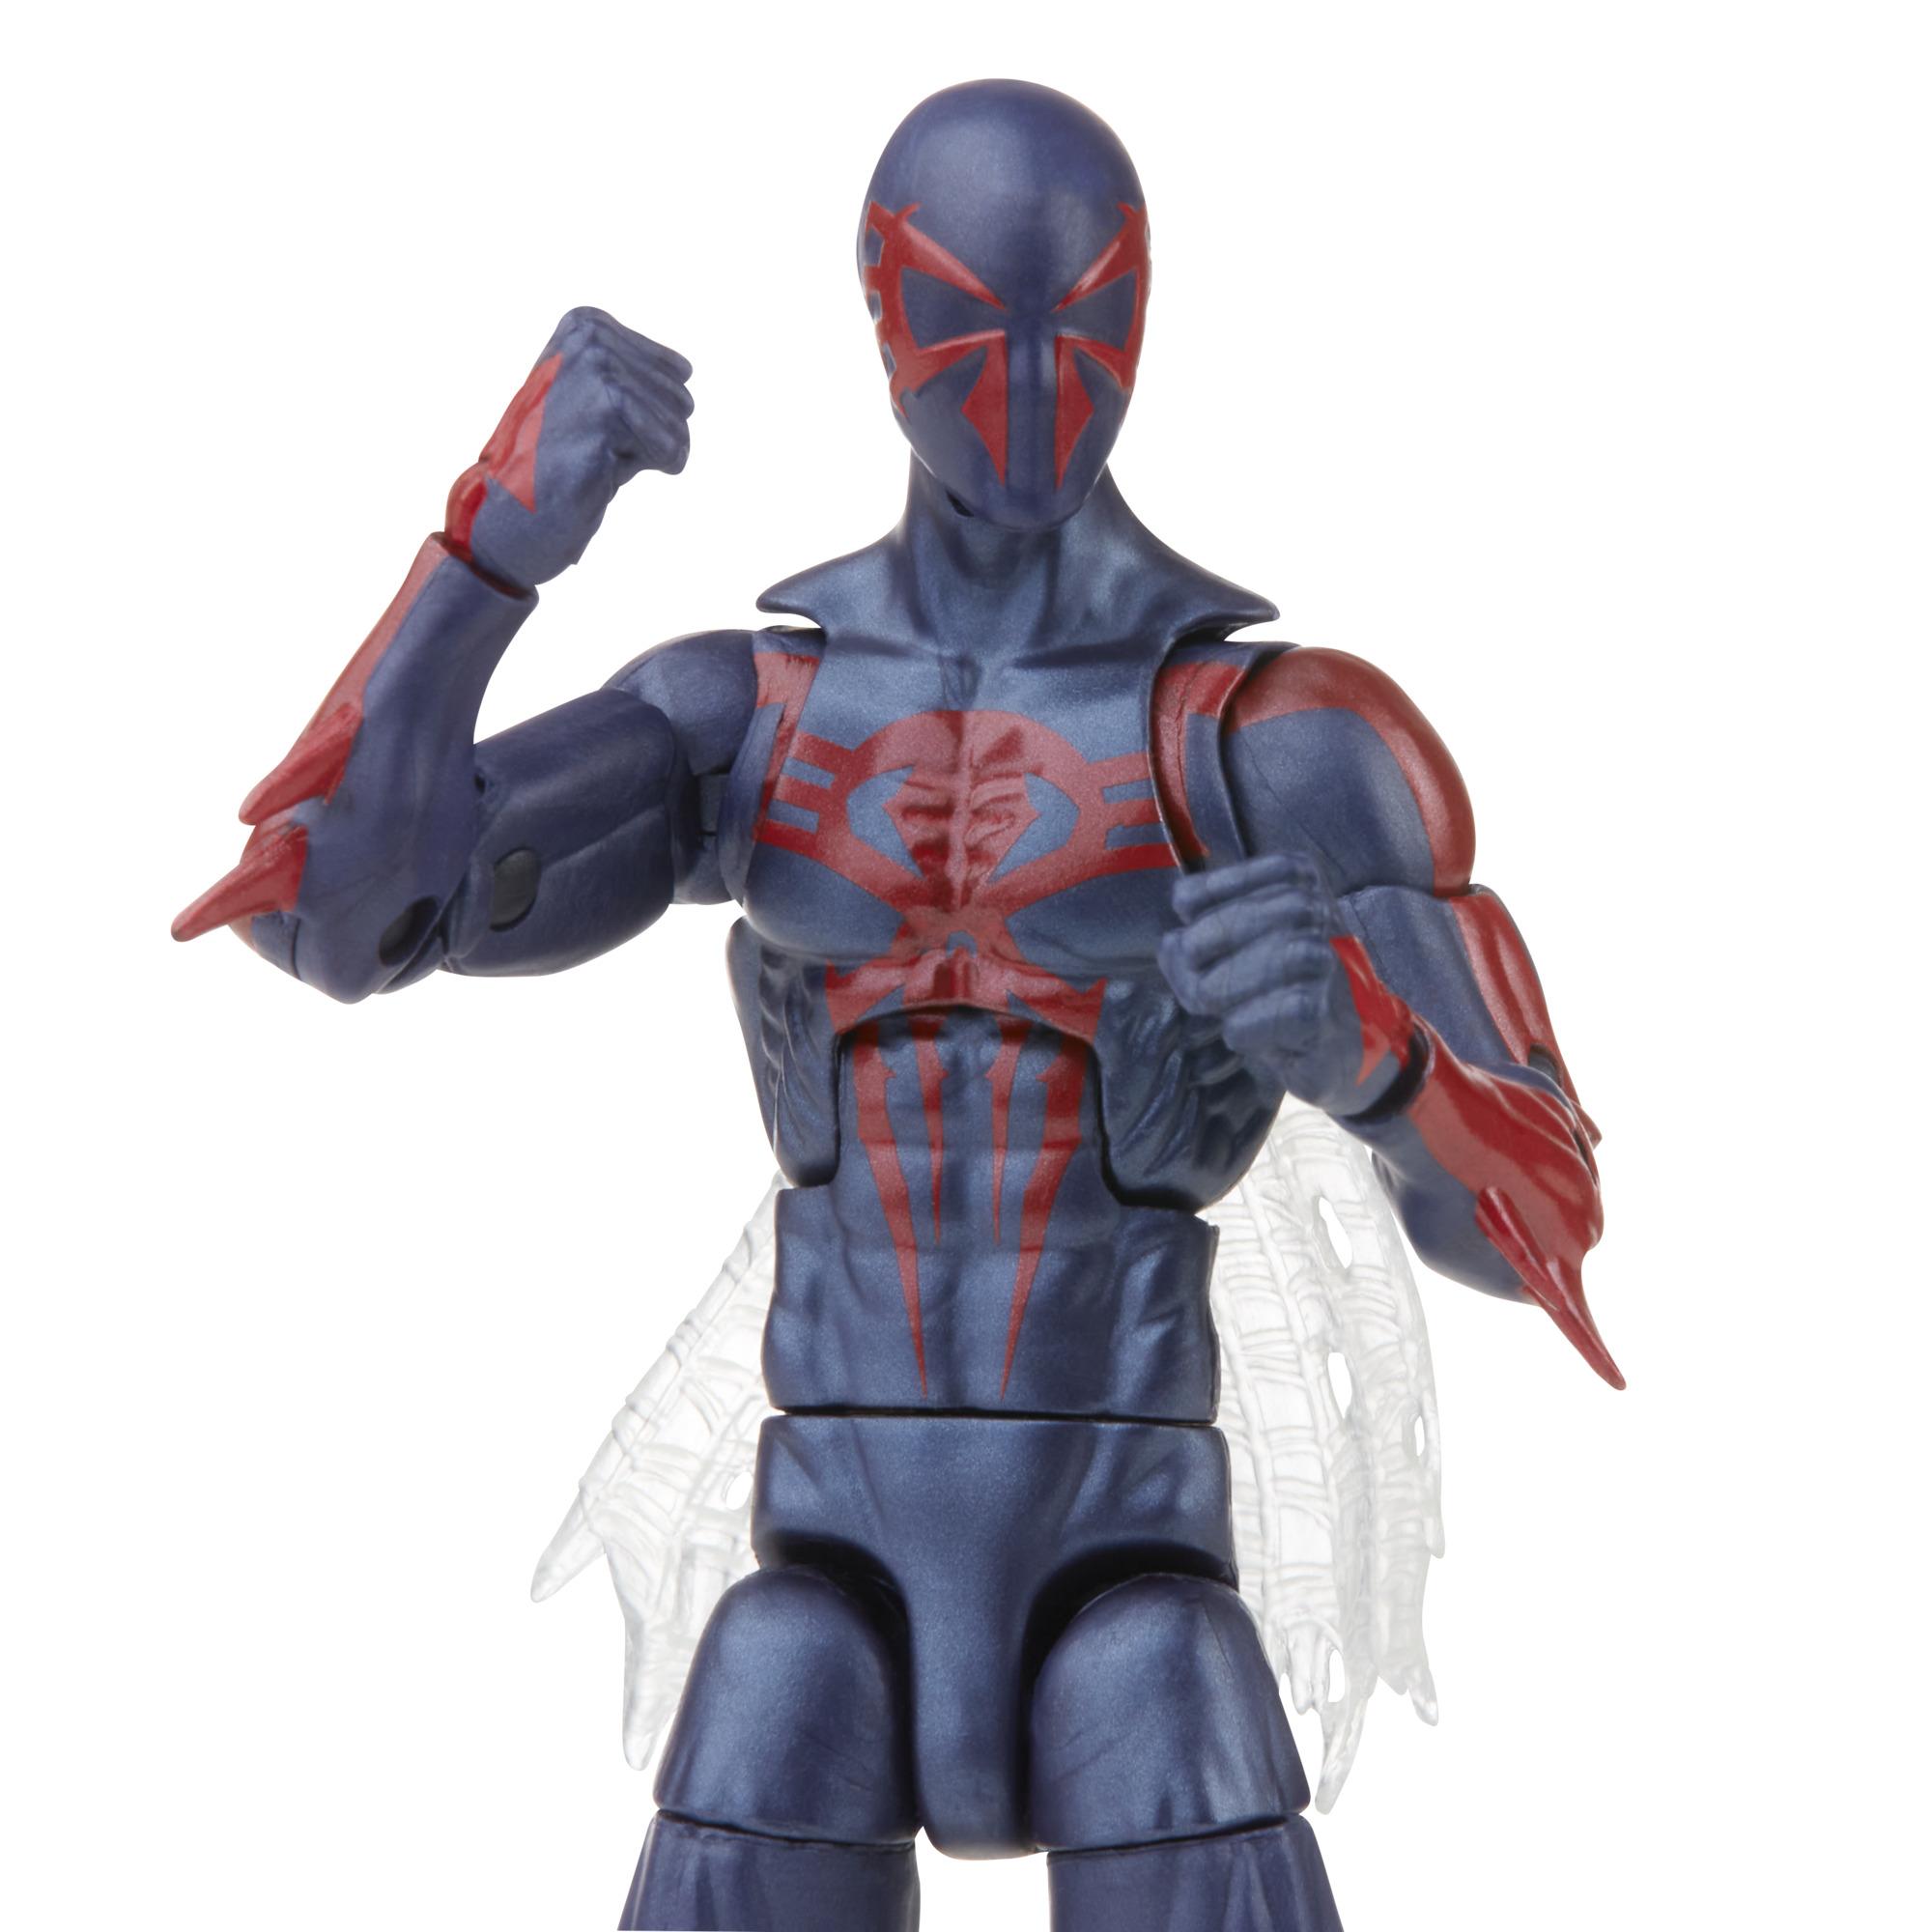 Marvel Legend Spider-Man Retro Action Figure - F0230 ProD SpD LegenDs6intv9 0008 Online 2000sq